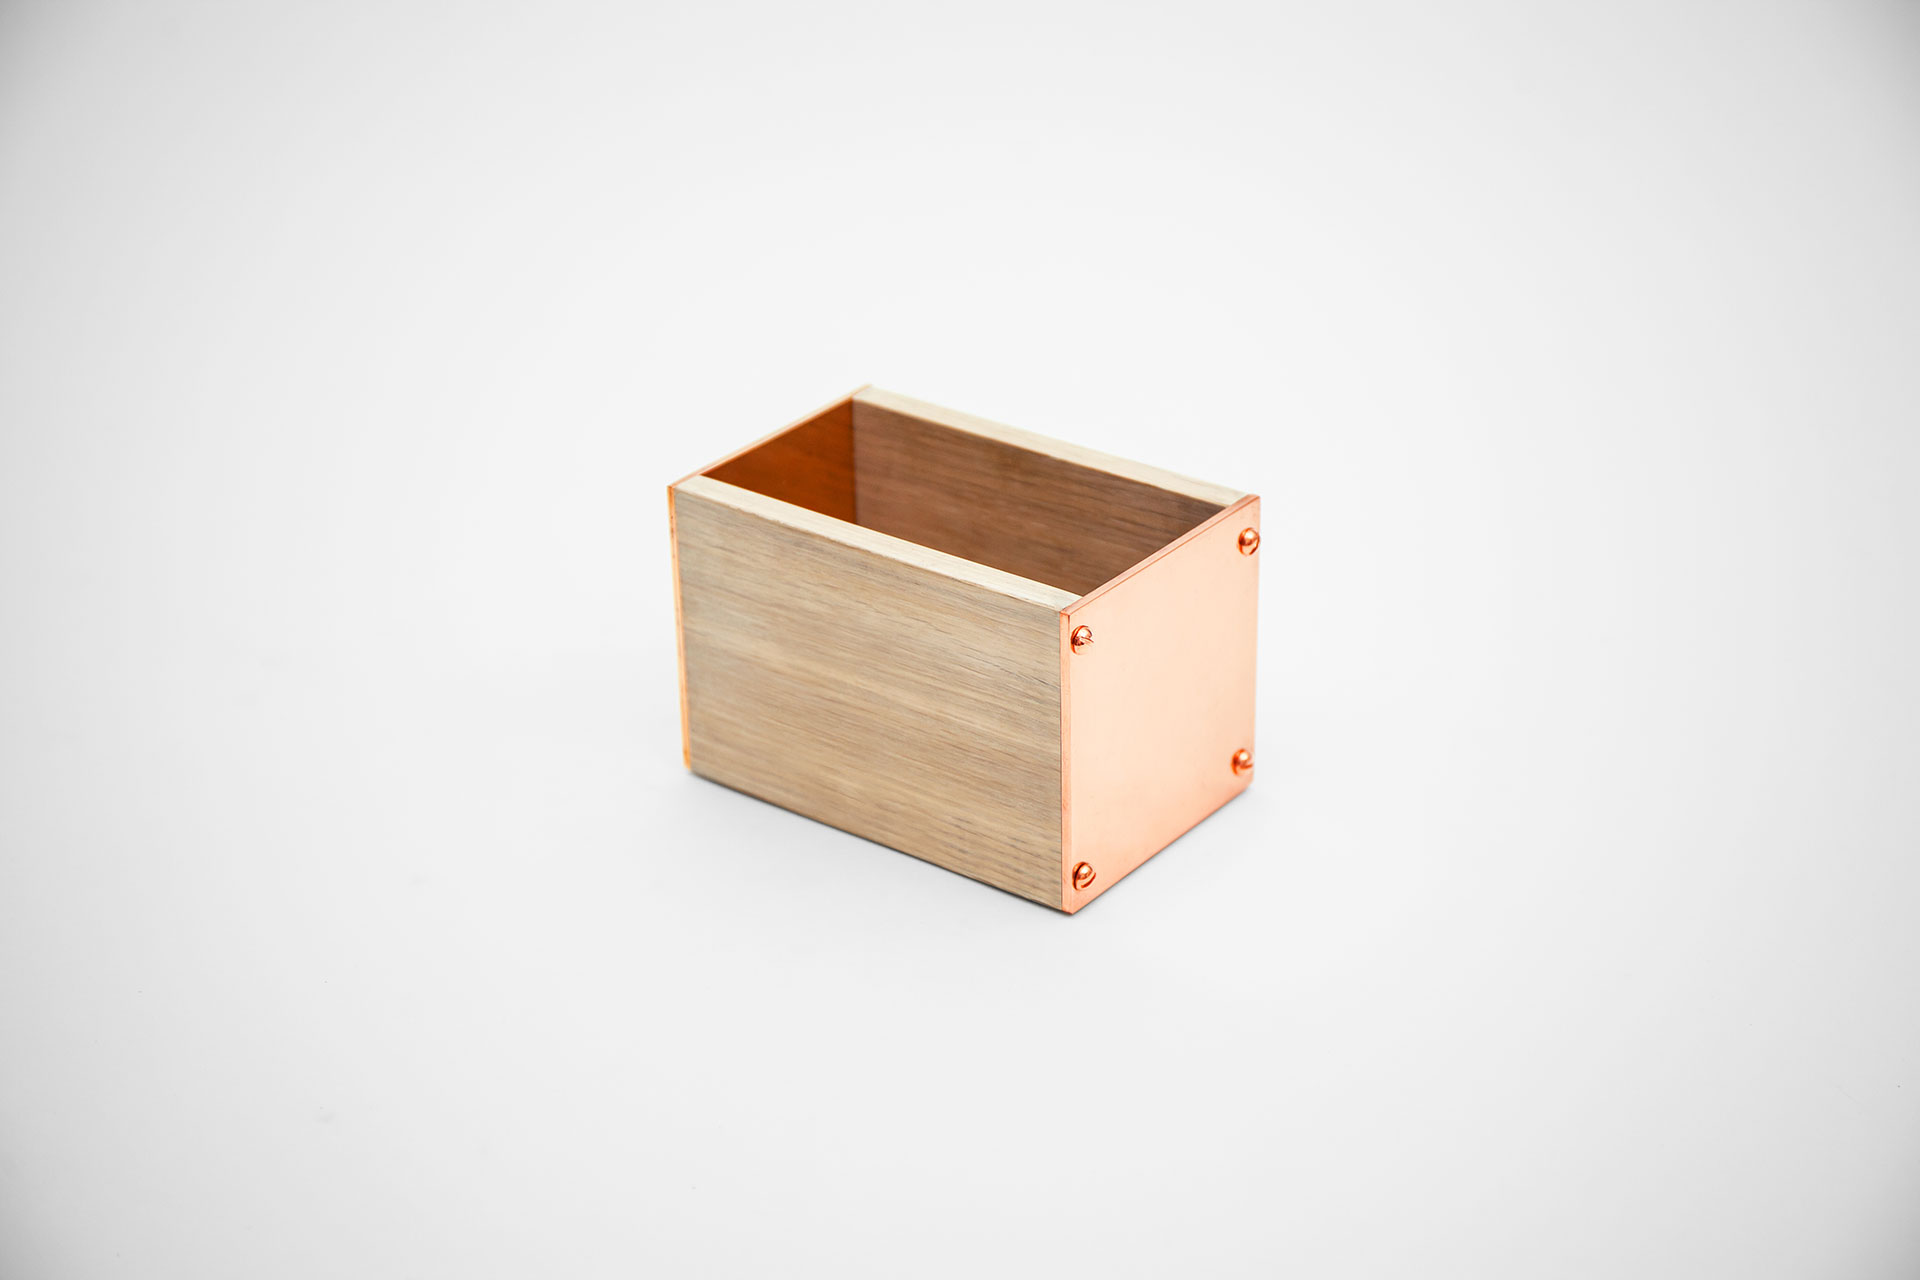 Copper and wood desk organizer